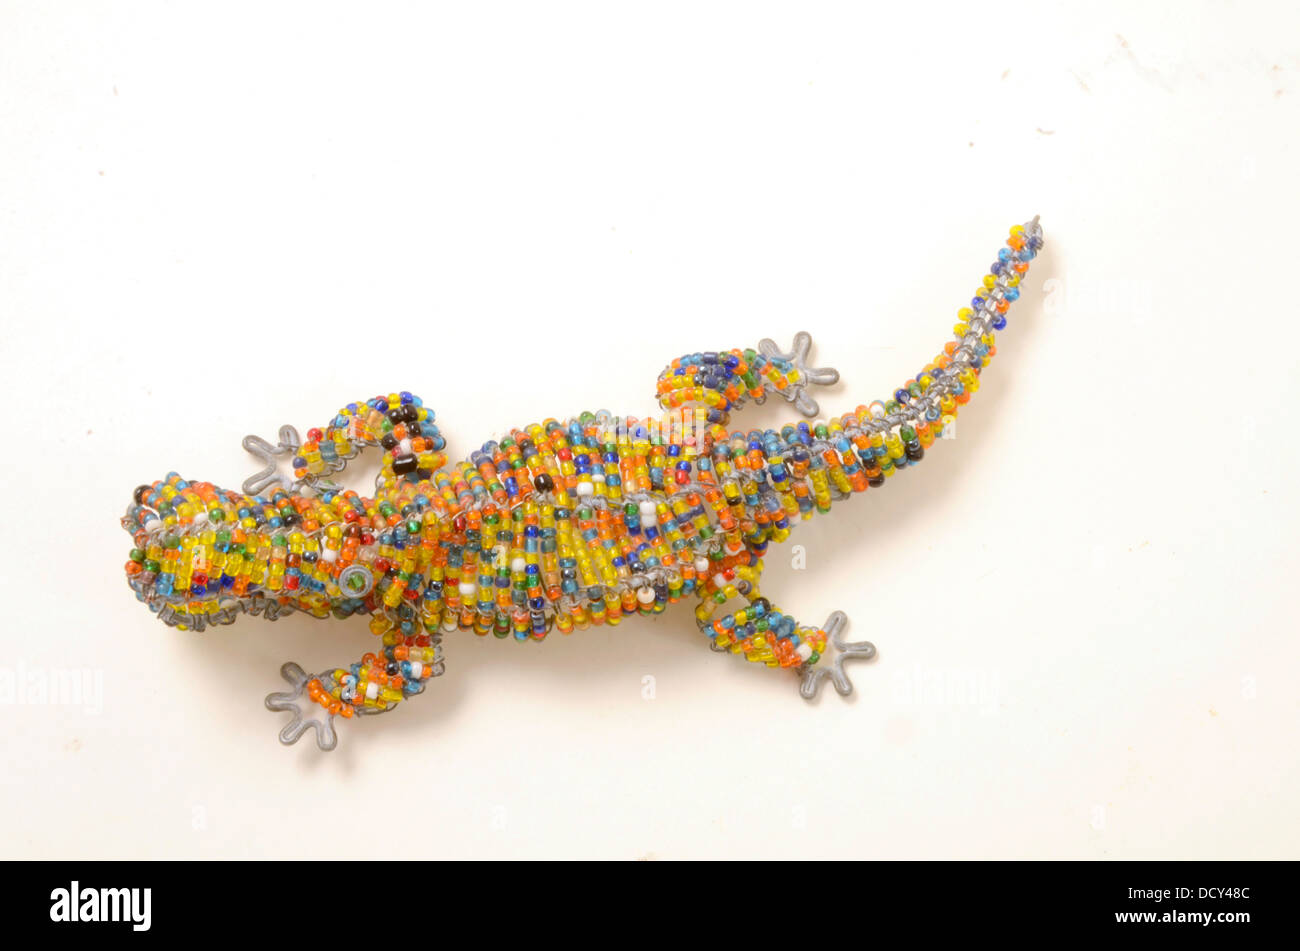 Model Rhinoceros handmade by threading beads onto a wire frame Stock Photo